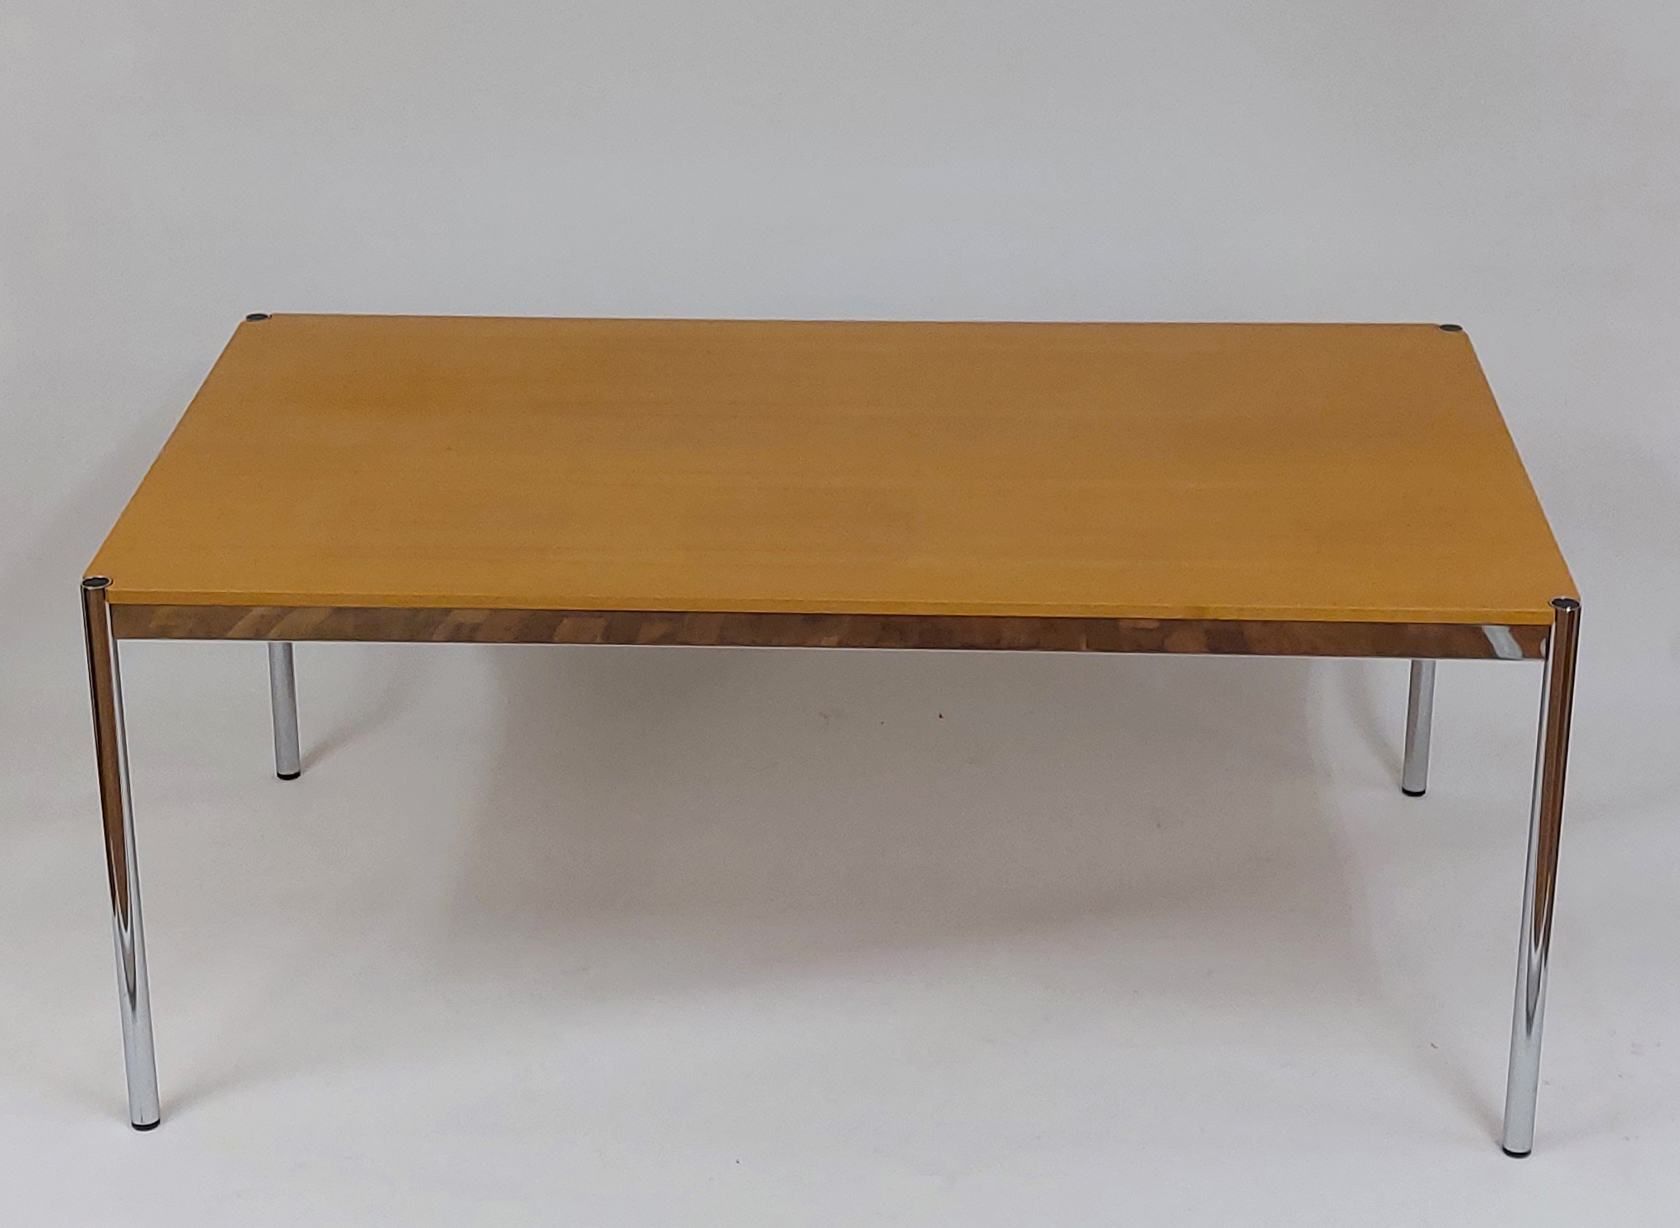 USM Haller Konferenztisch 镀铬金属桌腿和框架，木质桌面（有使用痕迹）。高 74 厘米。宽 175 厘米长 100 厘米